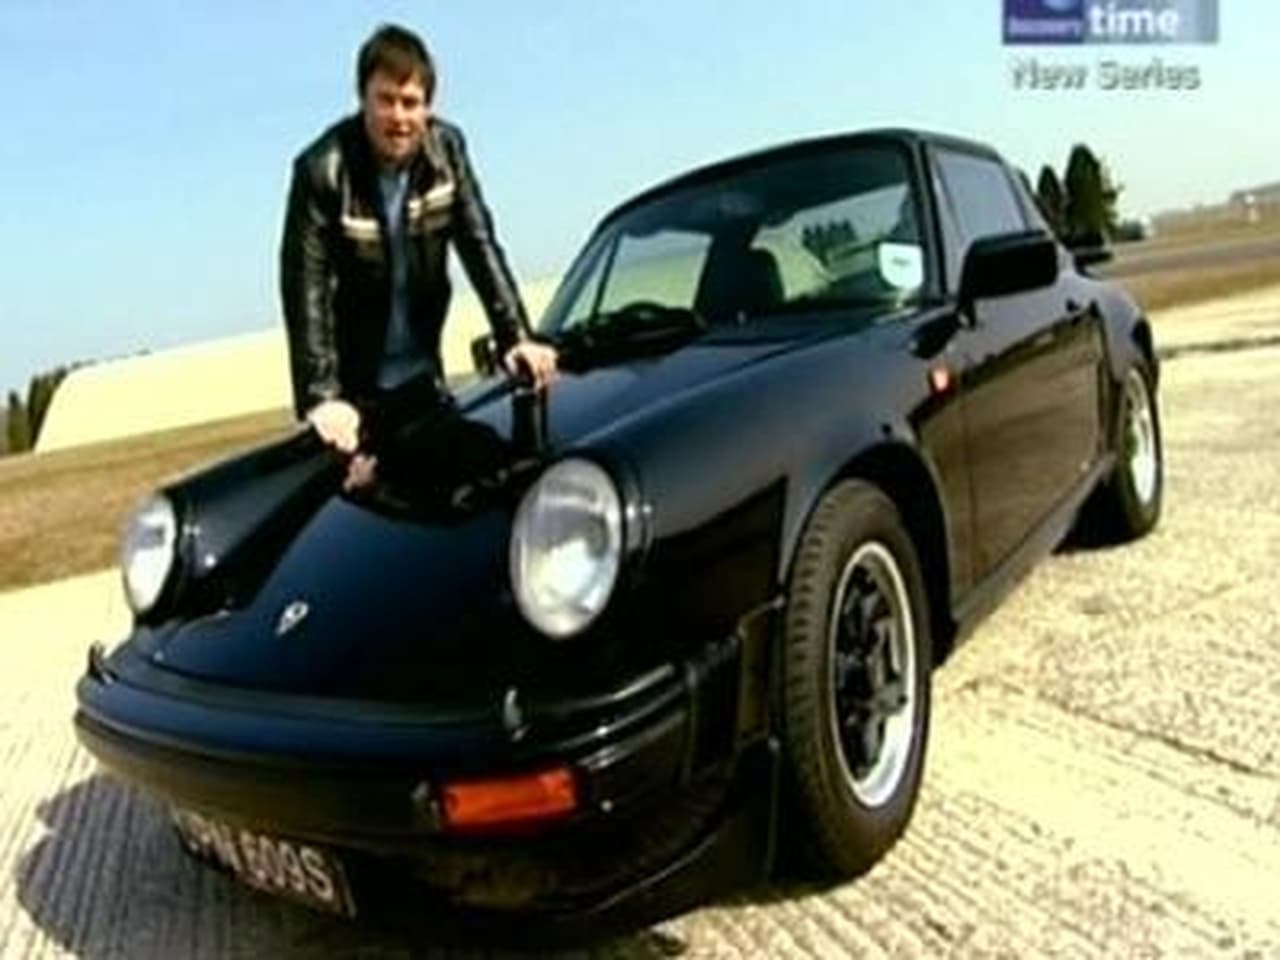 Wheeler Dealers - Season 4 Episode 1 : Porsche 911 2.7S Targa (Part 1)